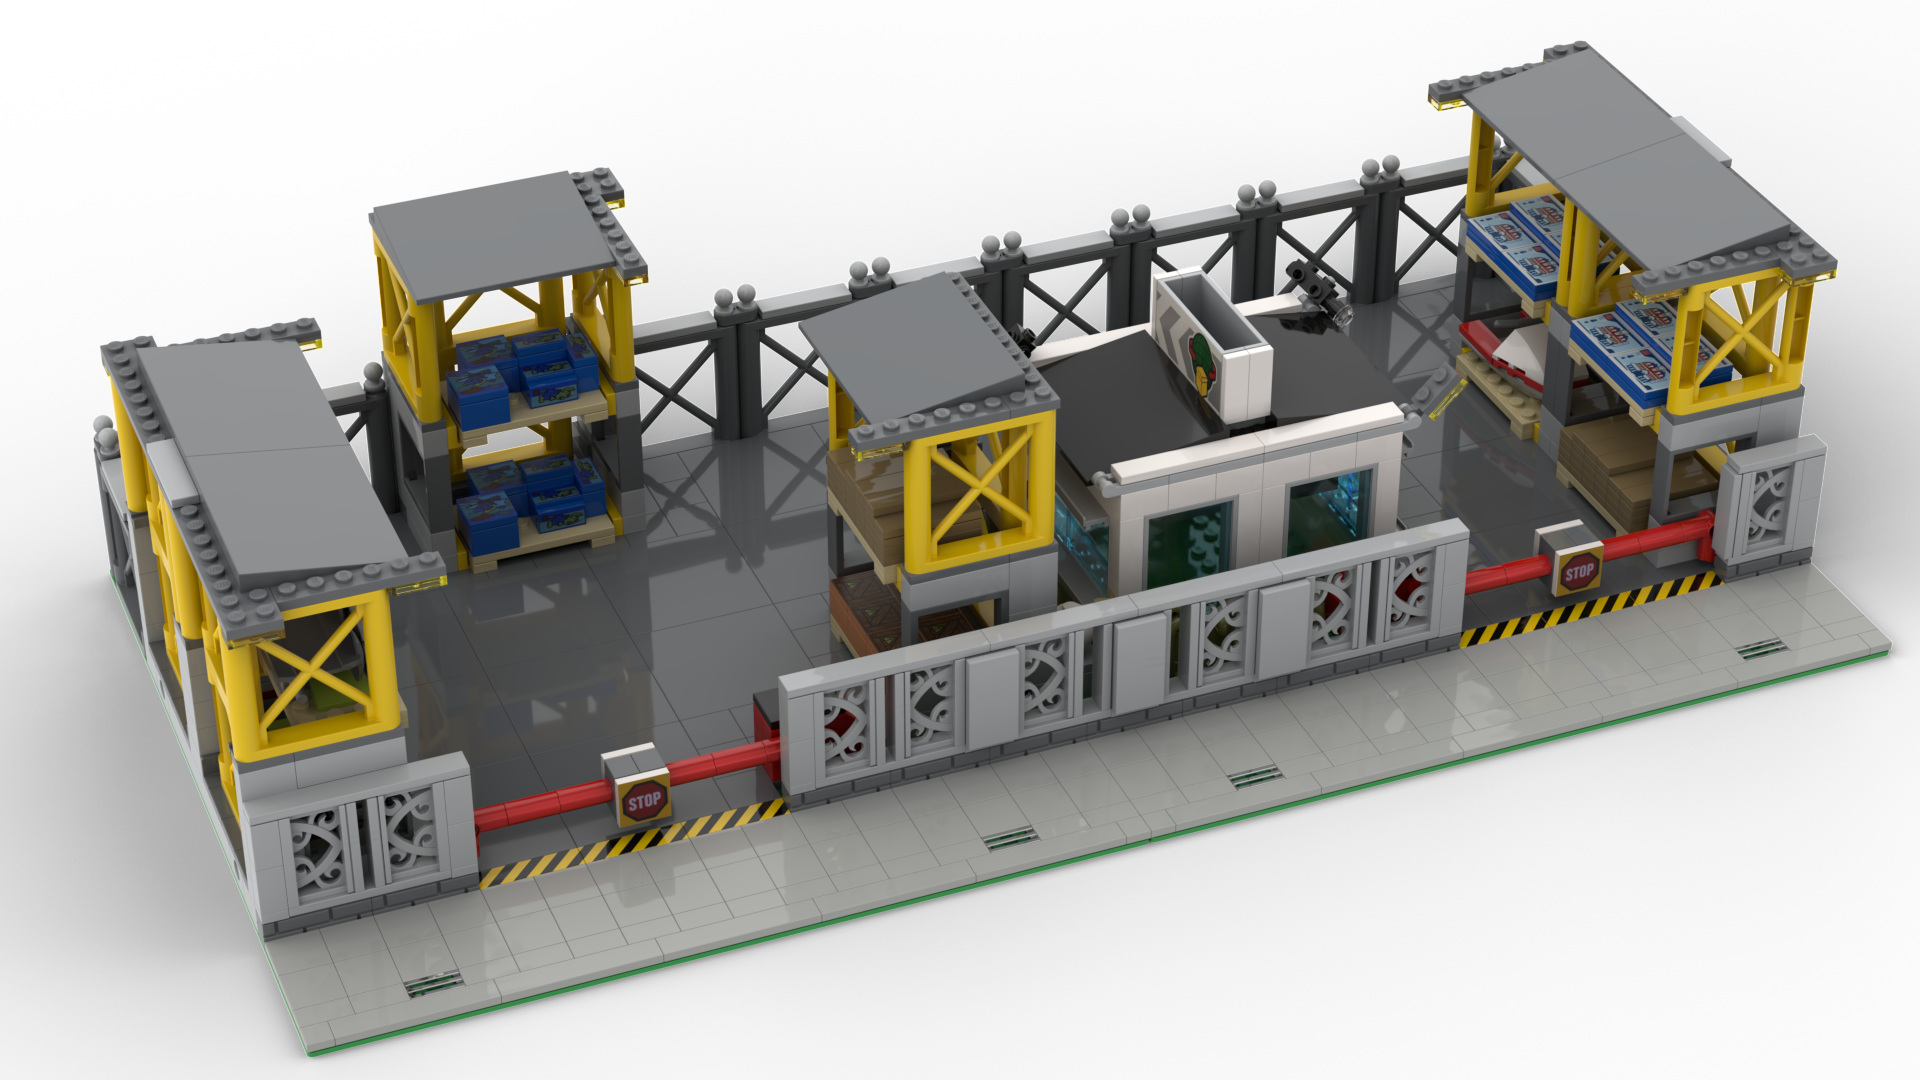 lego city cargo terminal instructions